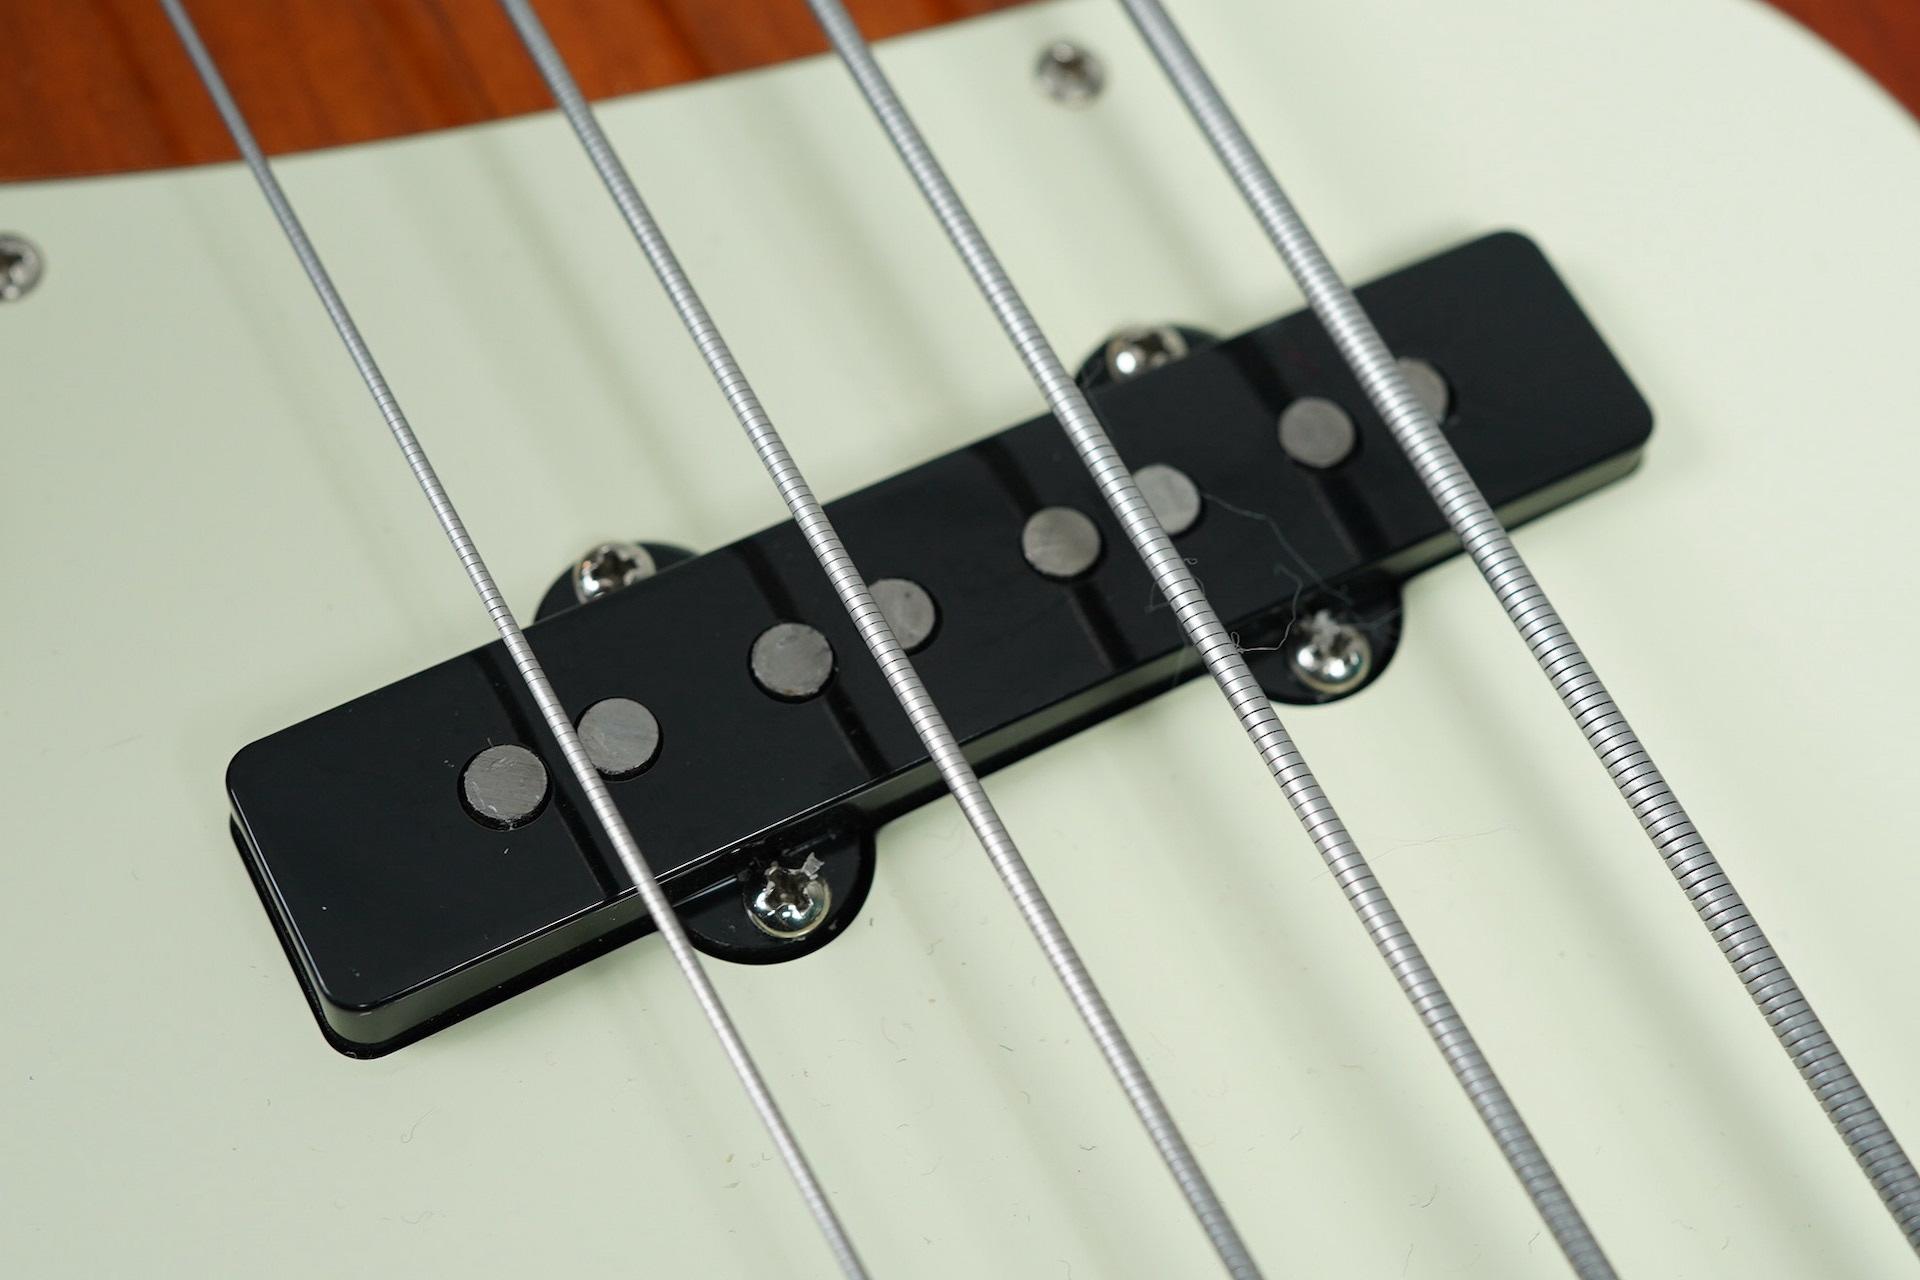 Fender American Professional Jazz Bass Fretless